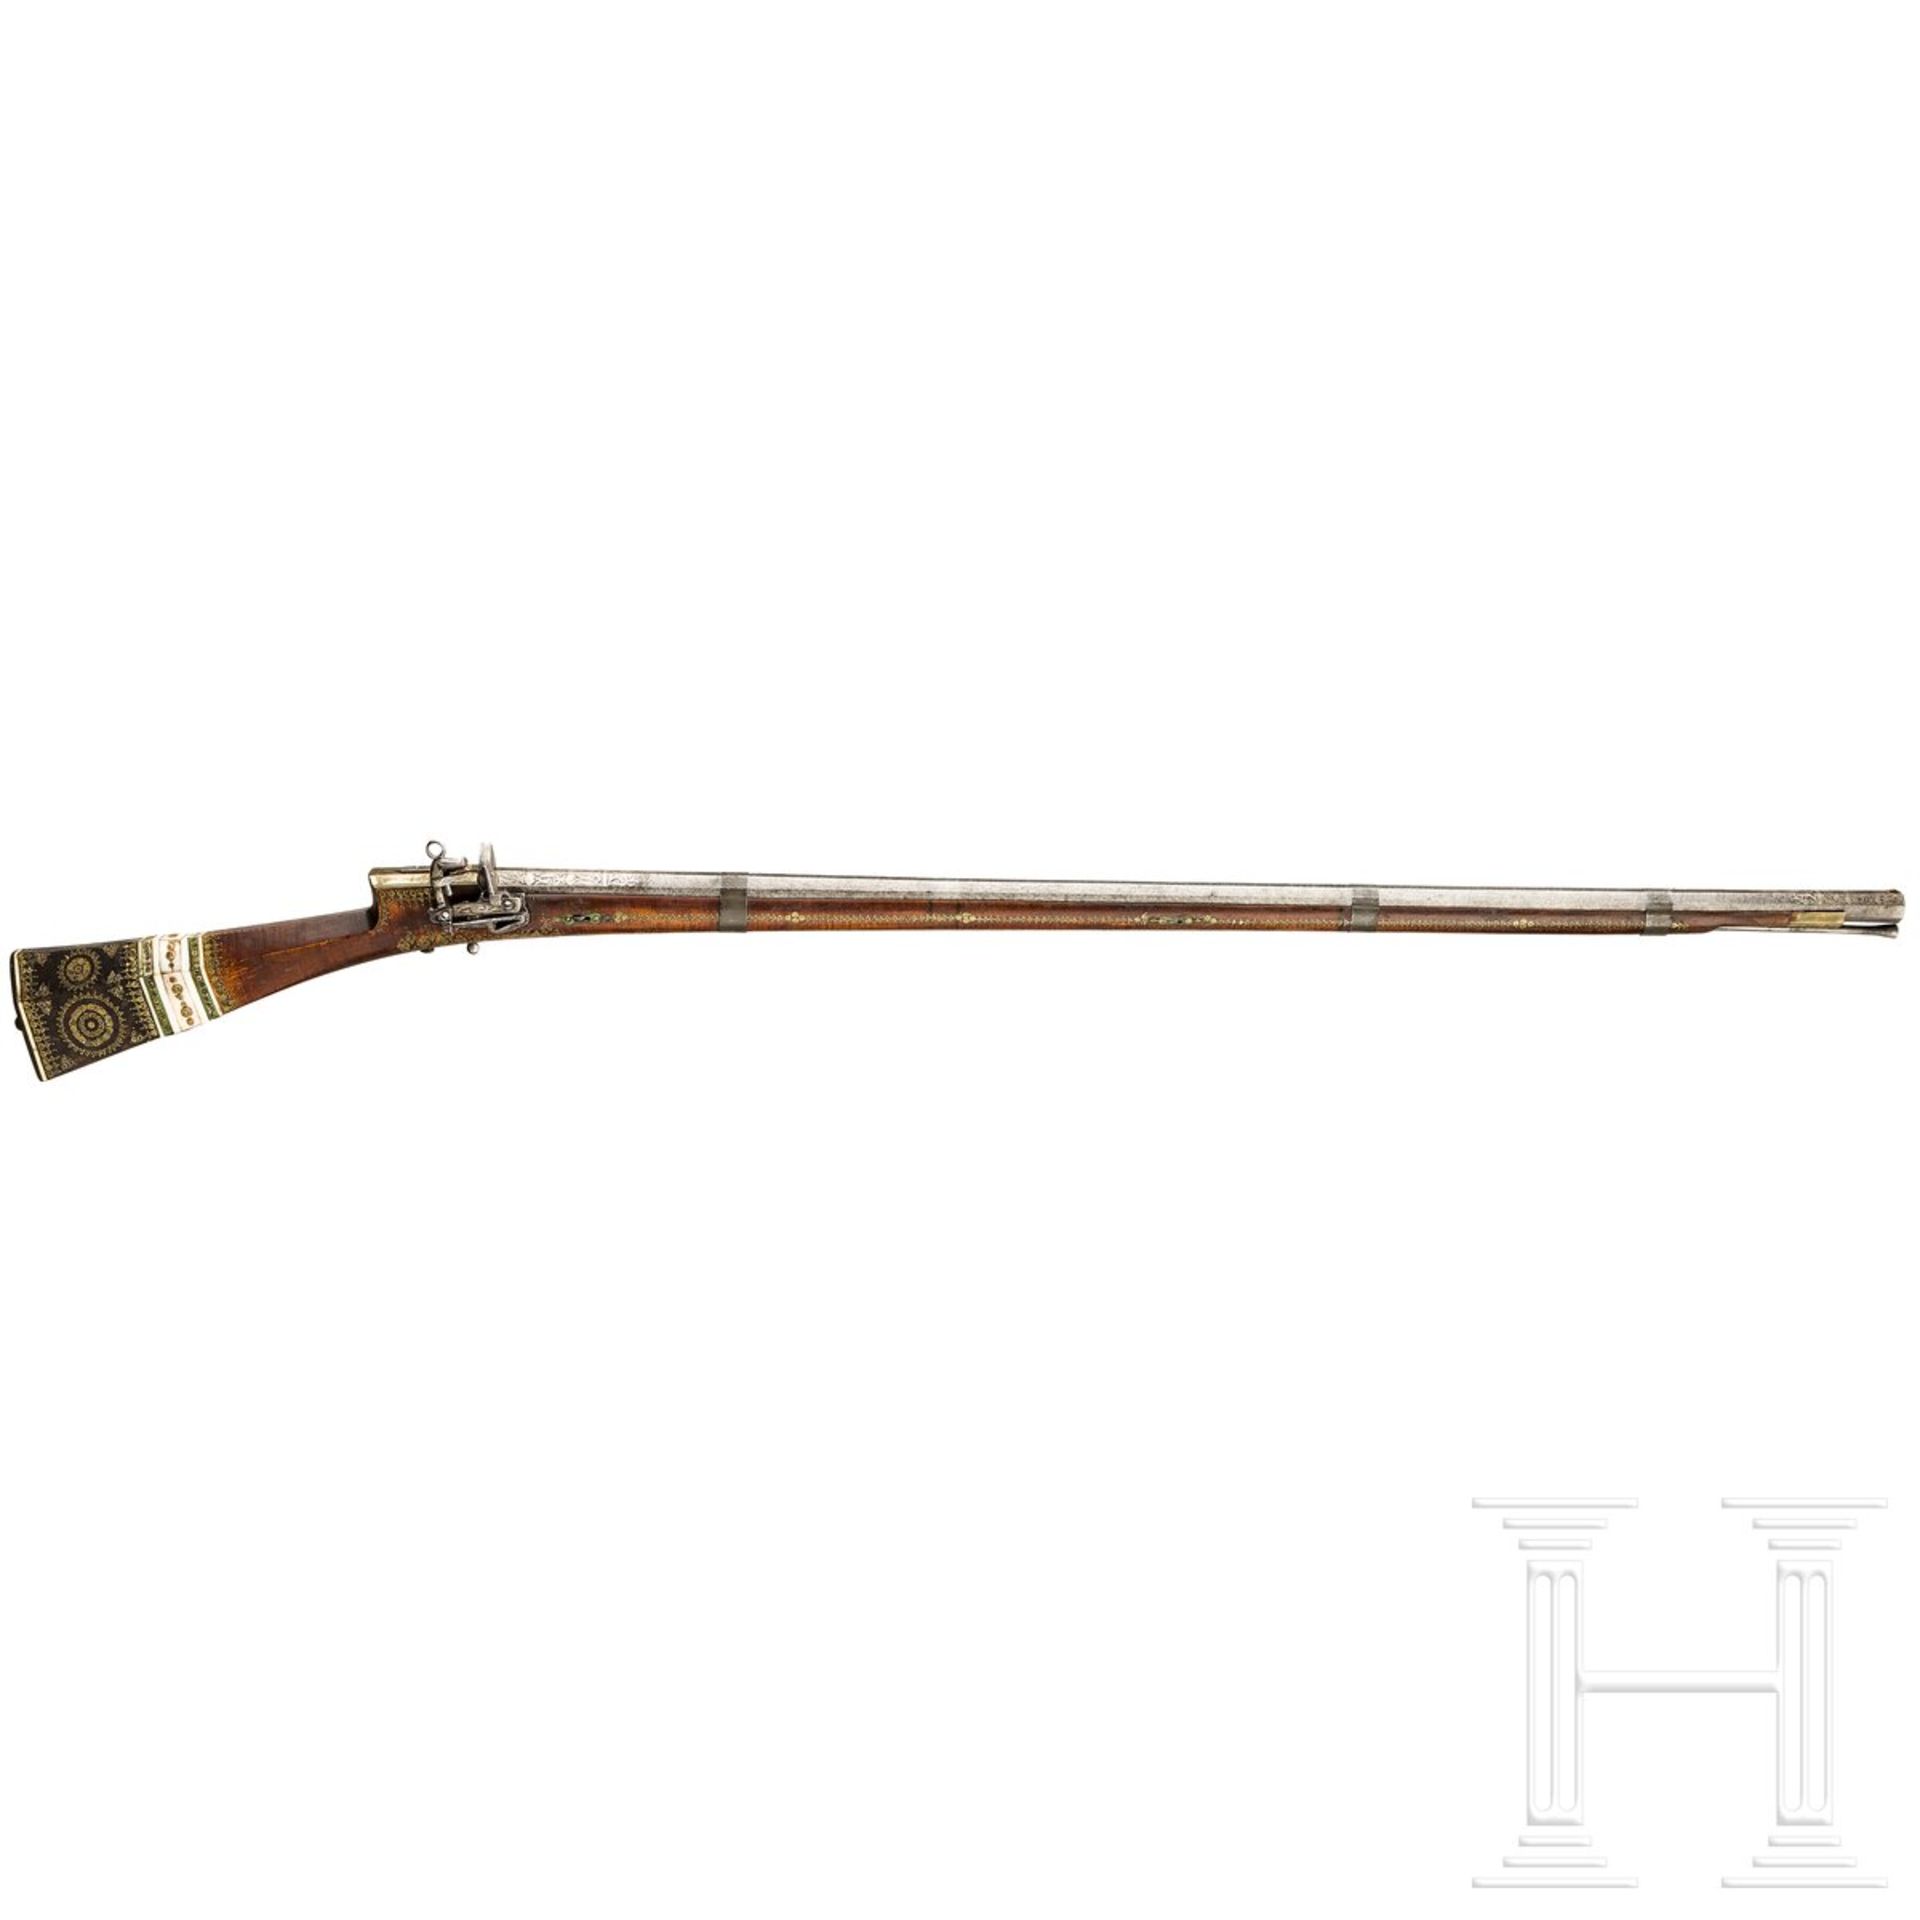 Tüfek, osmanisch, 19. Jhdt. - Image 2 of 4